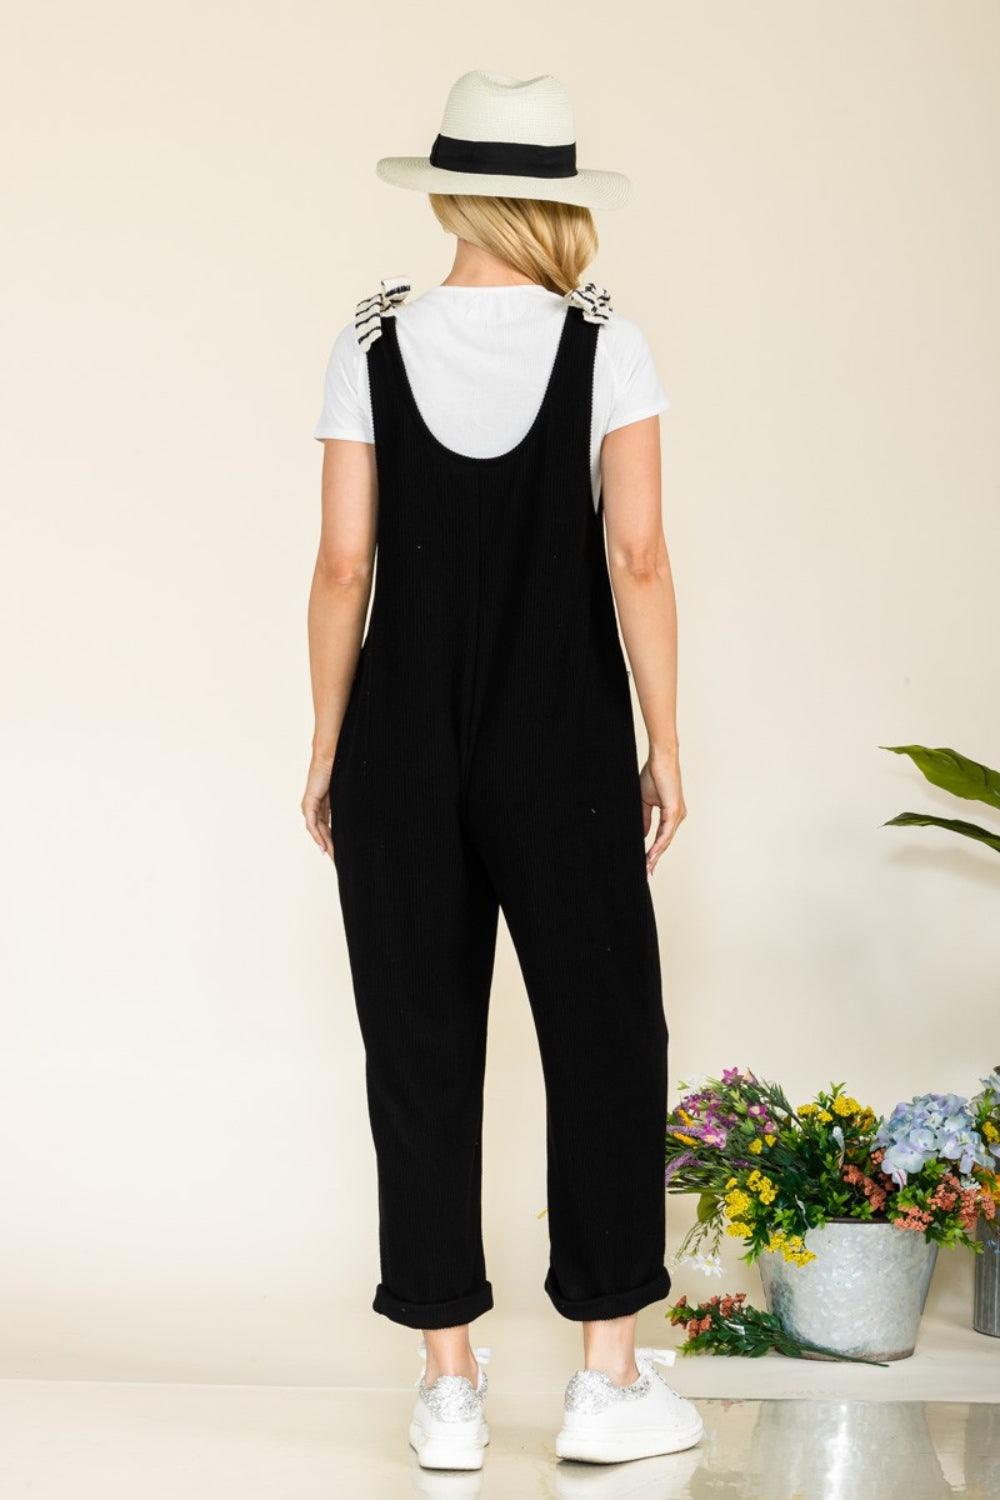 Celeste Full Size Stripe Contrast Pocket Rib Jumpsuit - AMIClubwear